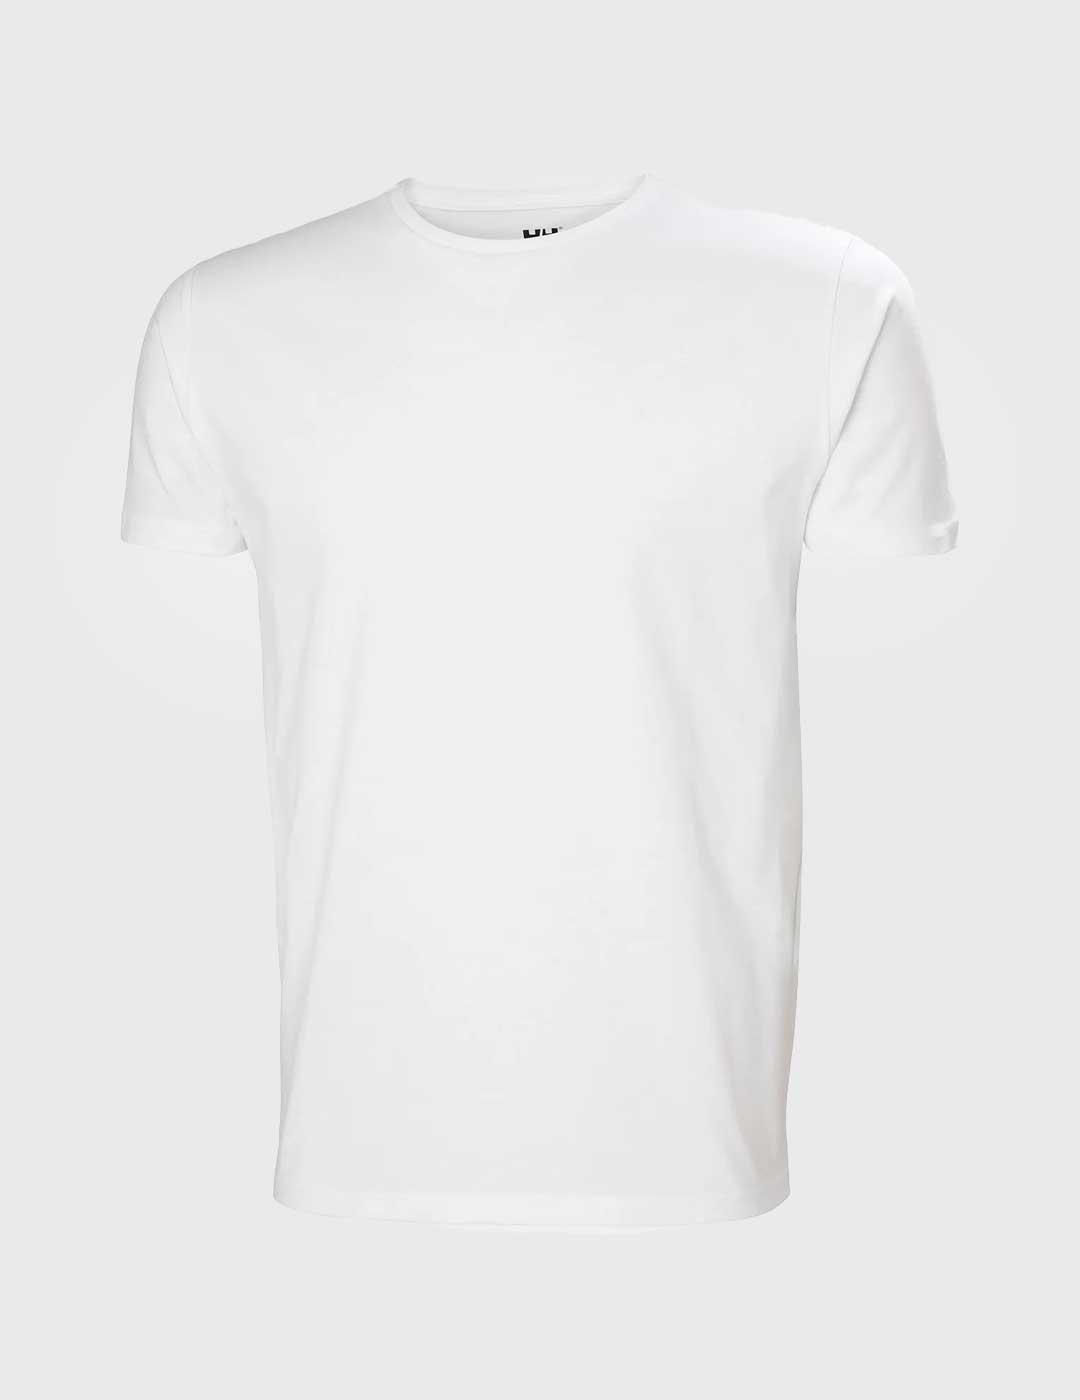 Camiseta Helly Hansen Shoreline blanca para hombre